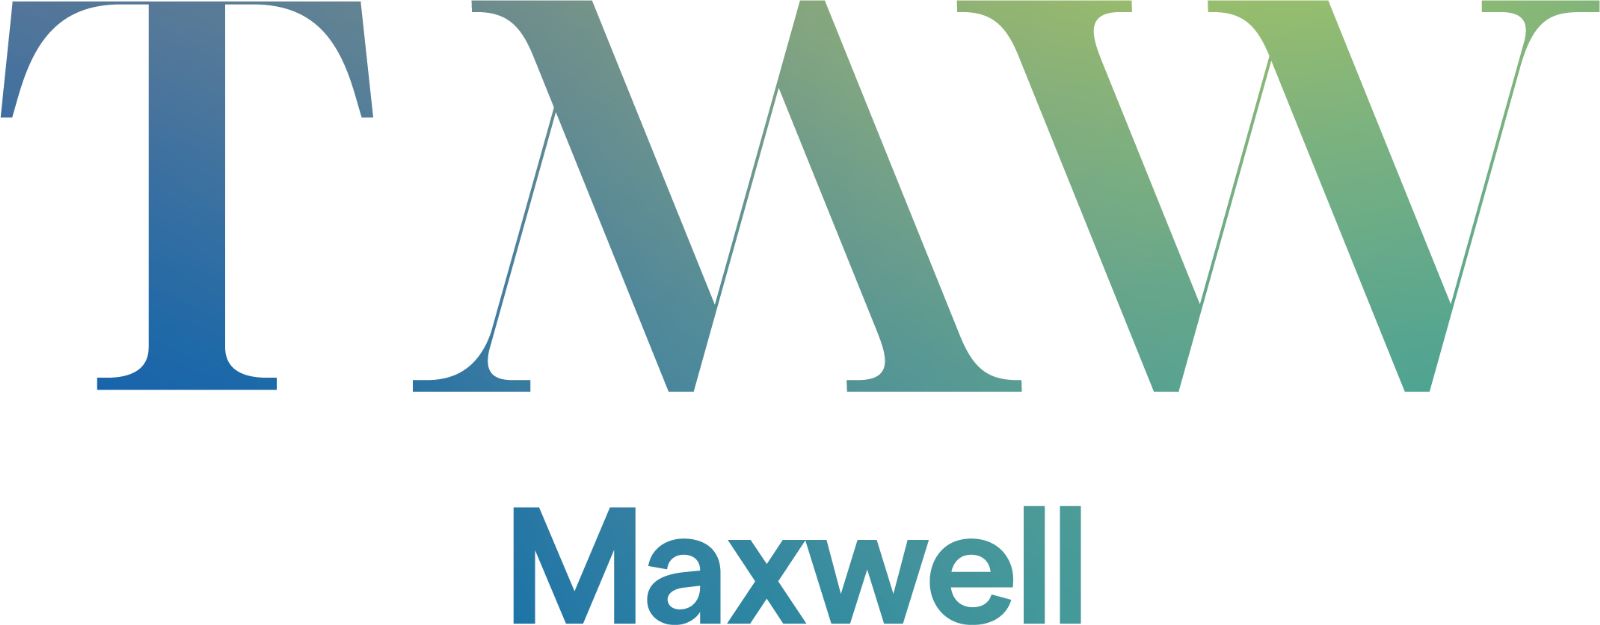 TMW Maxwell image